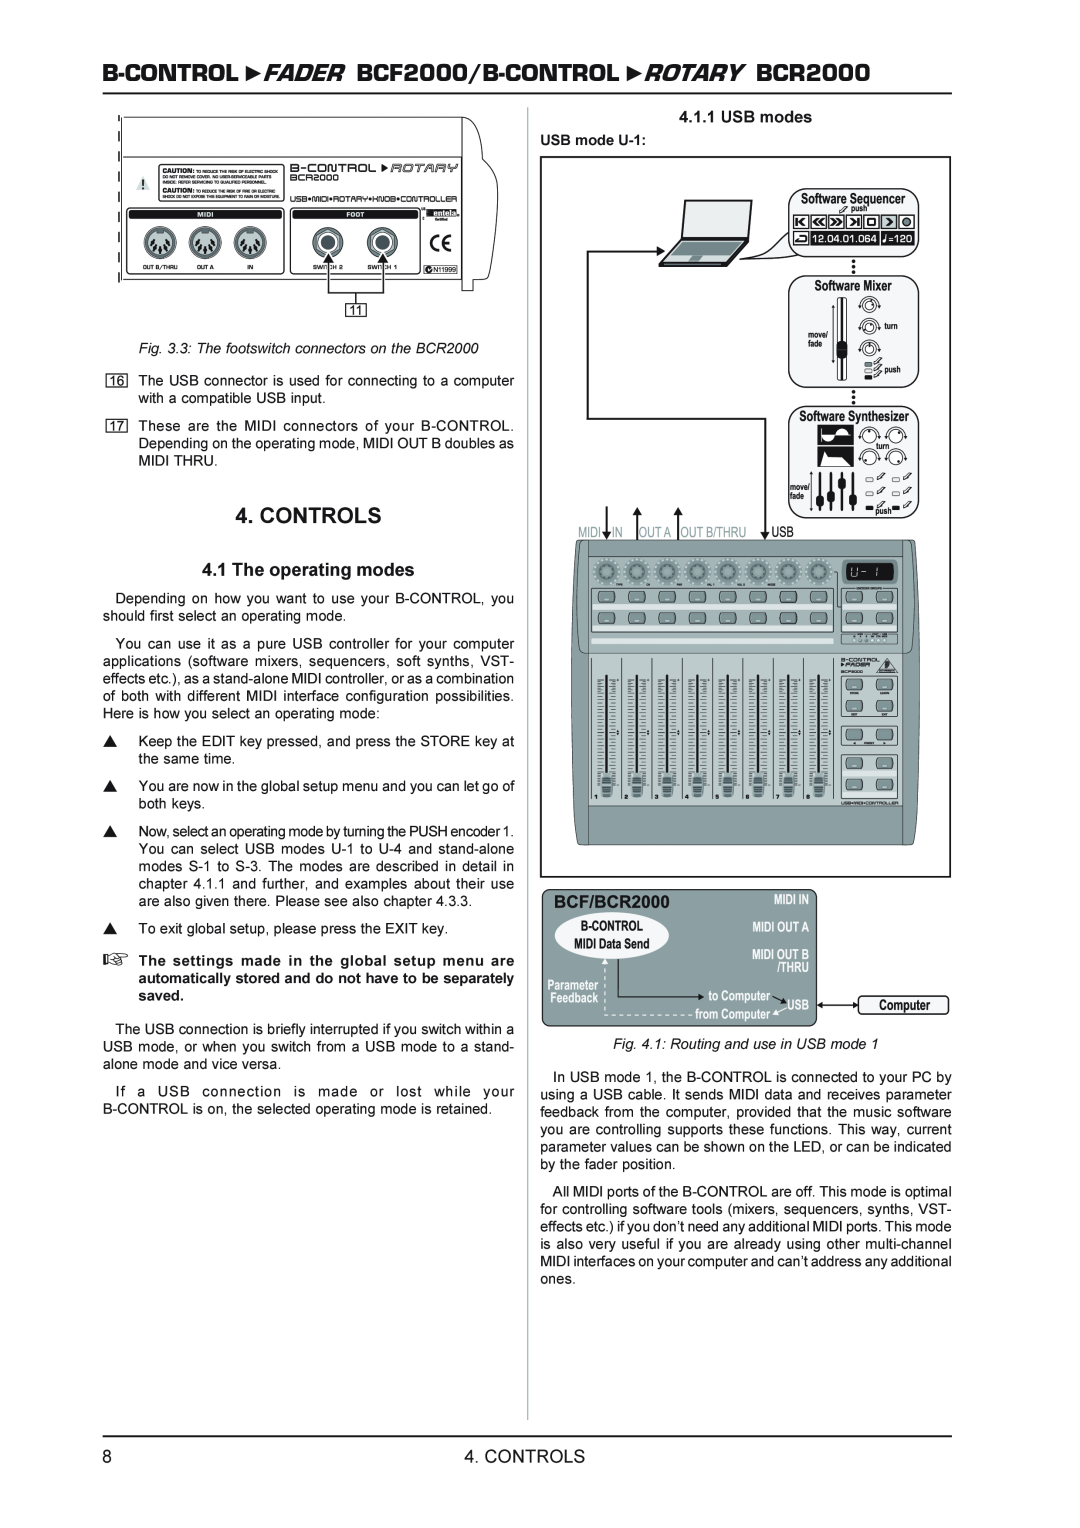 Behringer FADERB CF2000B manual Controls, 4.1The operating modes, B-CONTROL FADER BCF2000/B-CONTROL ROTARY BCR2000 